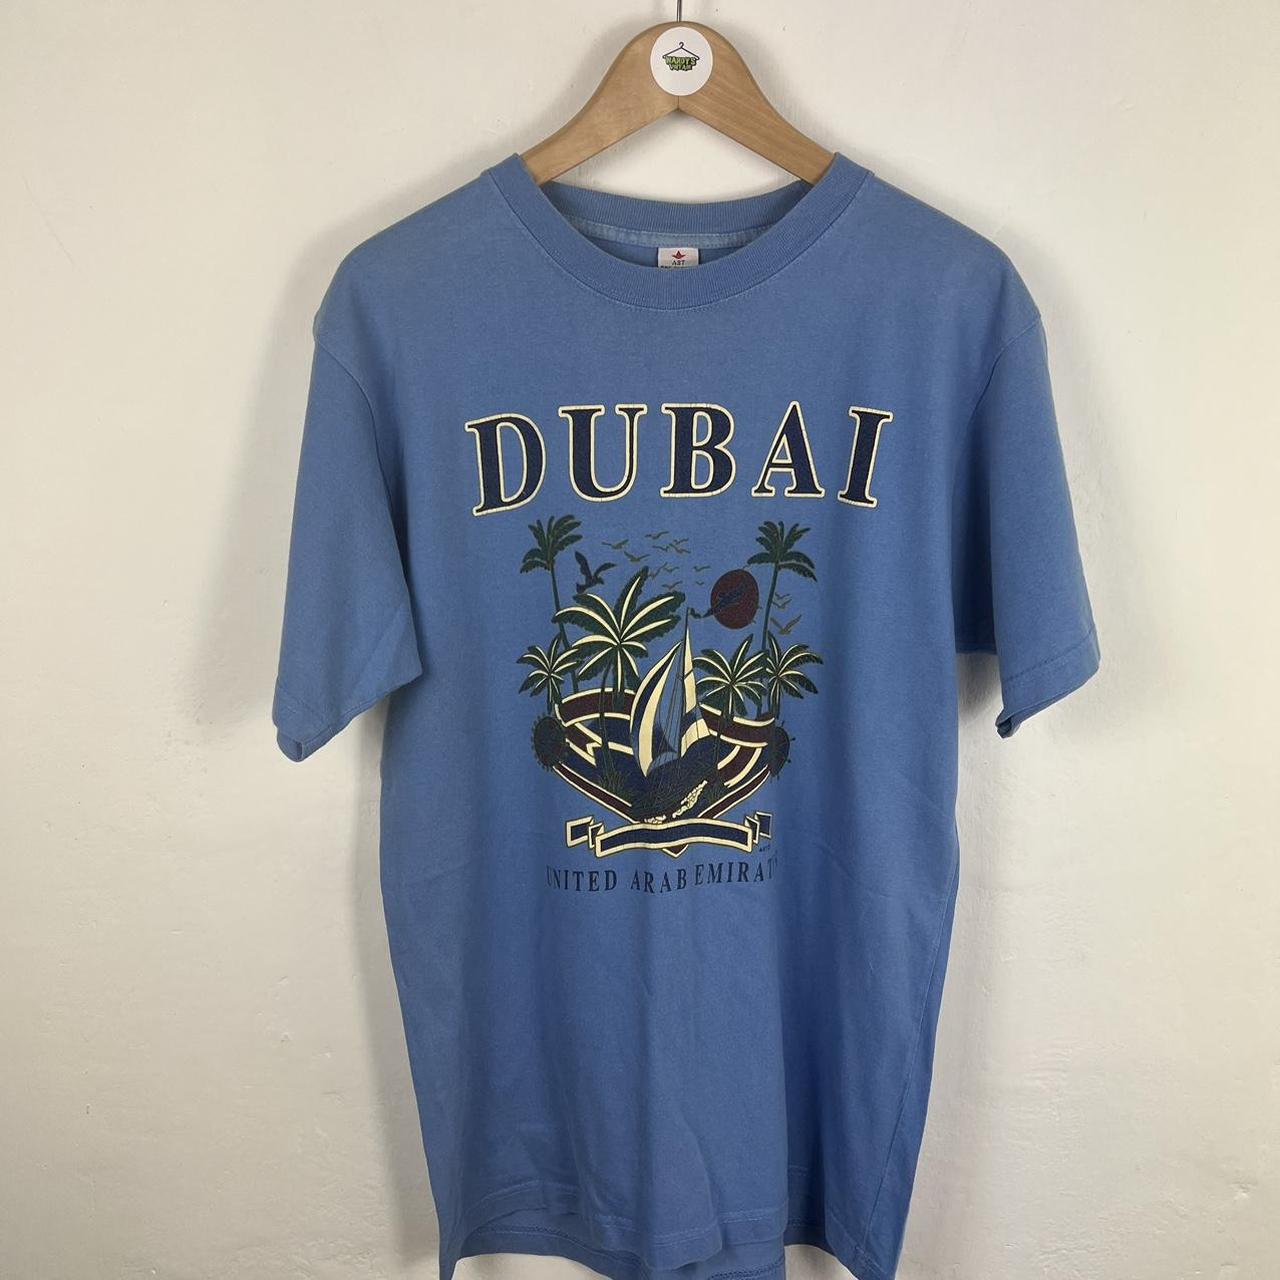 Dubai t shirt large